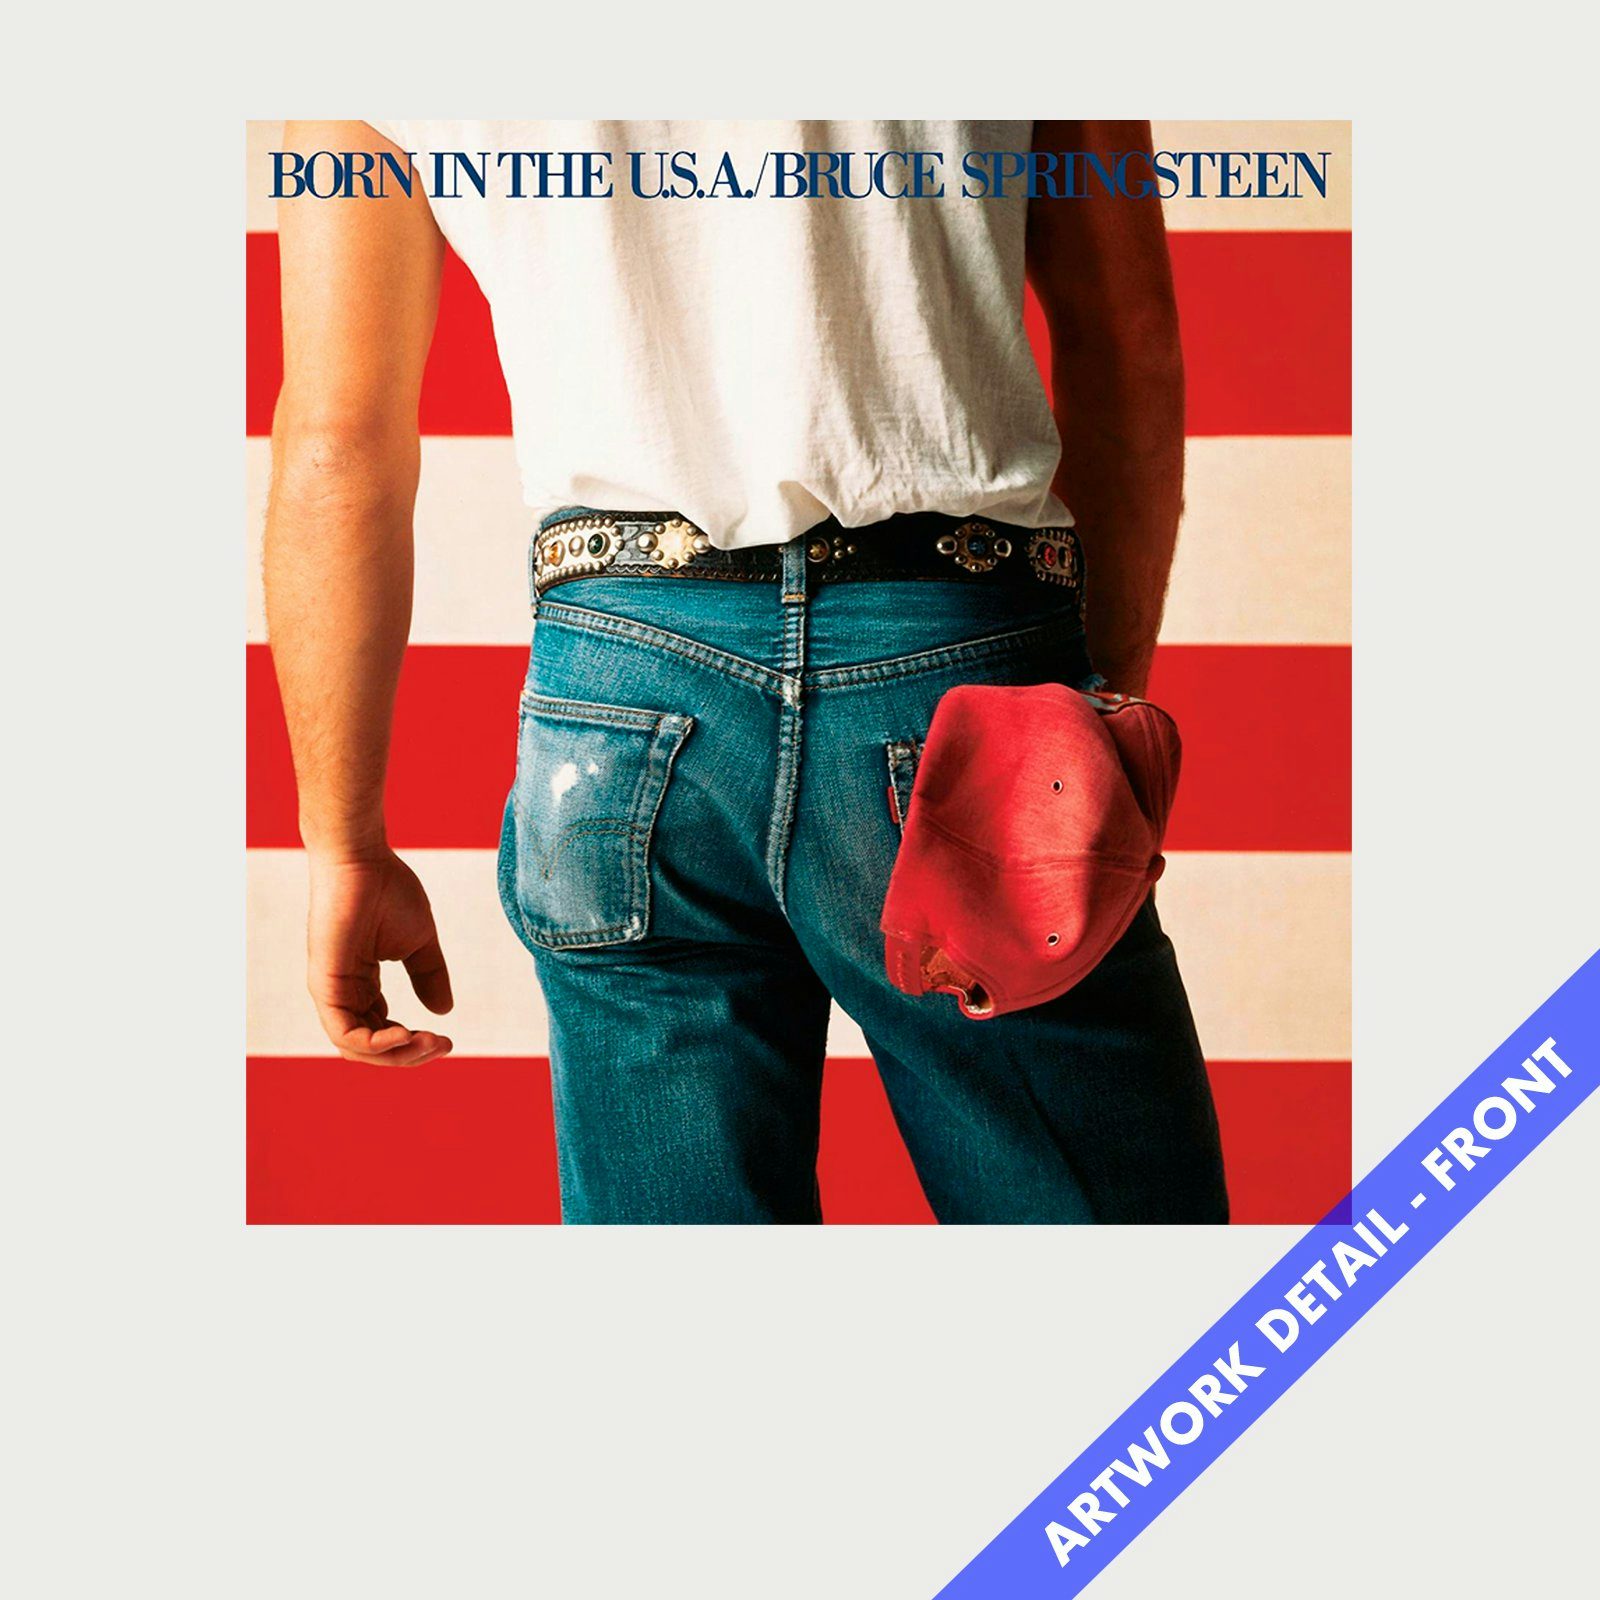 Générique Bruce Springsteen T Shirt Born in The USA Album Cover Logo Officiel Homme